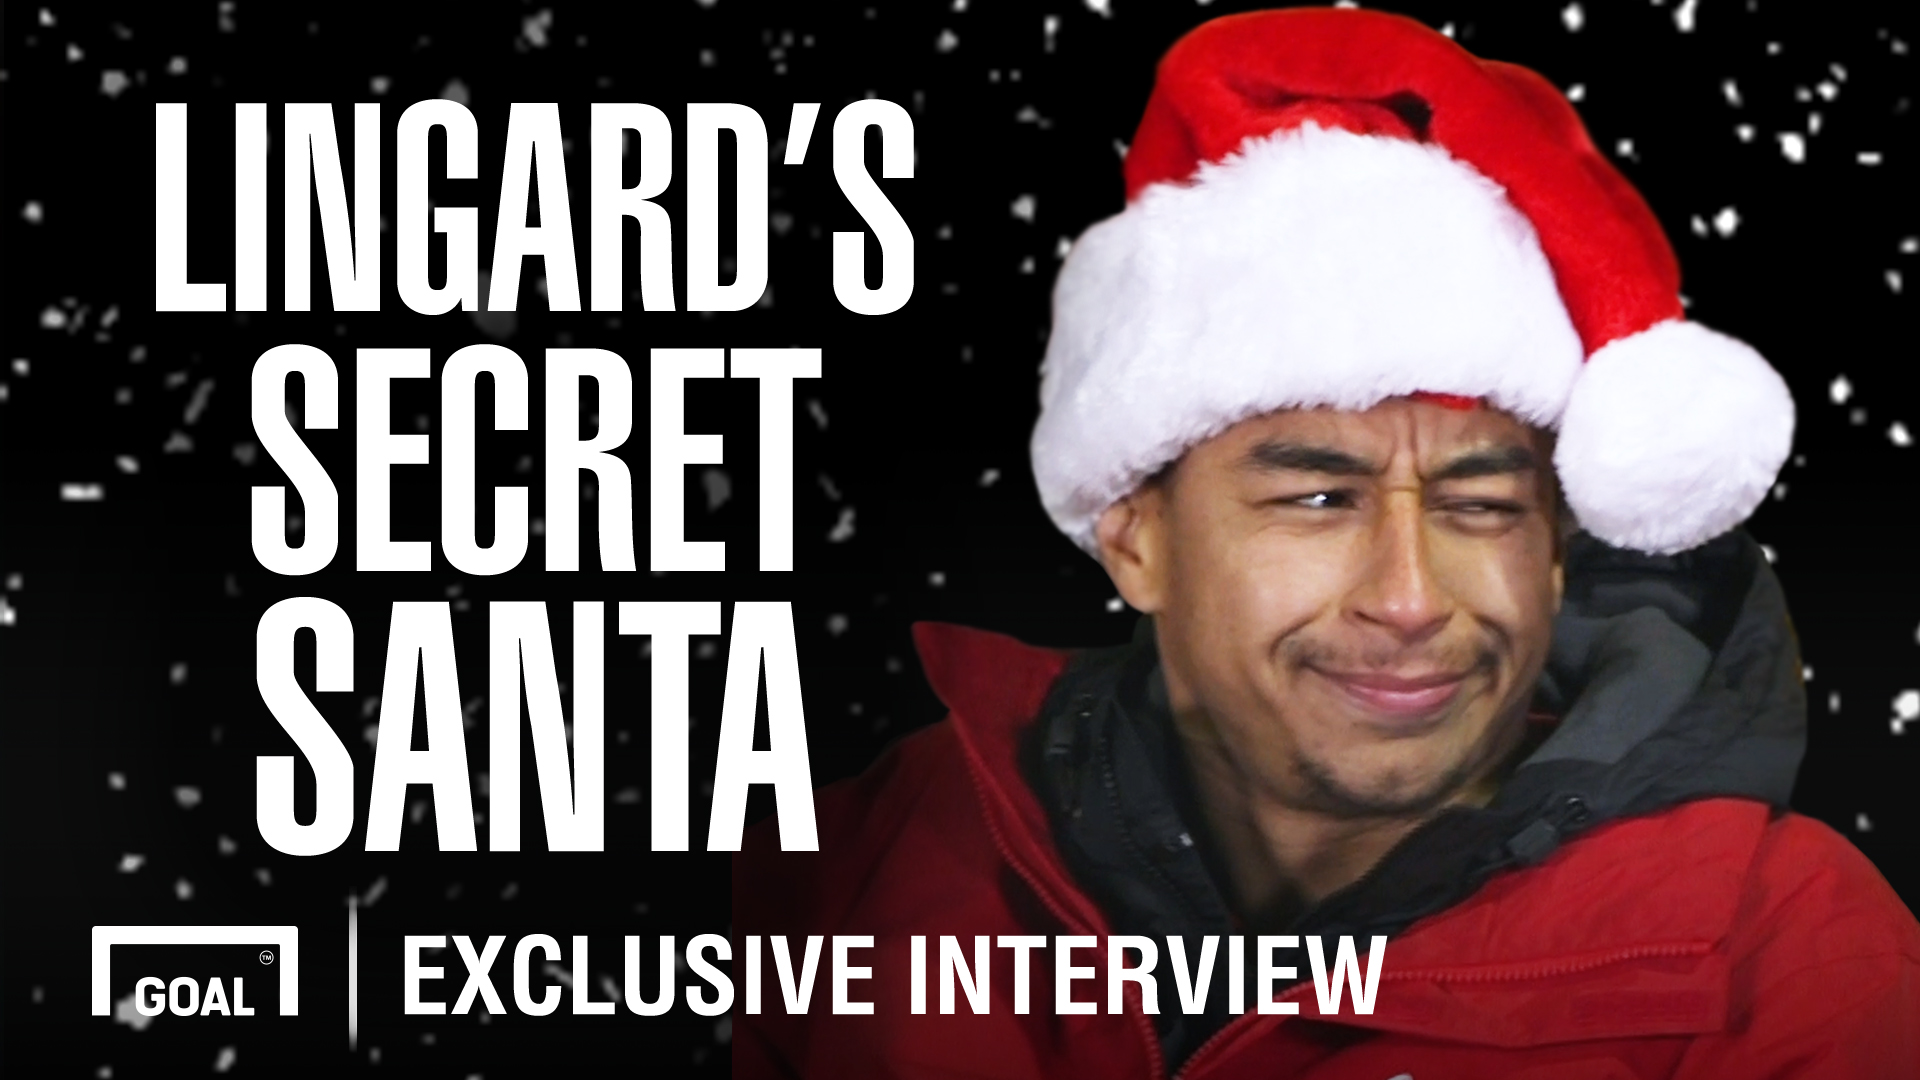 Video: Man Utd star Lingard's Secret Santa